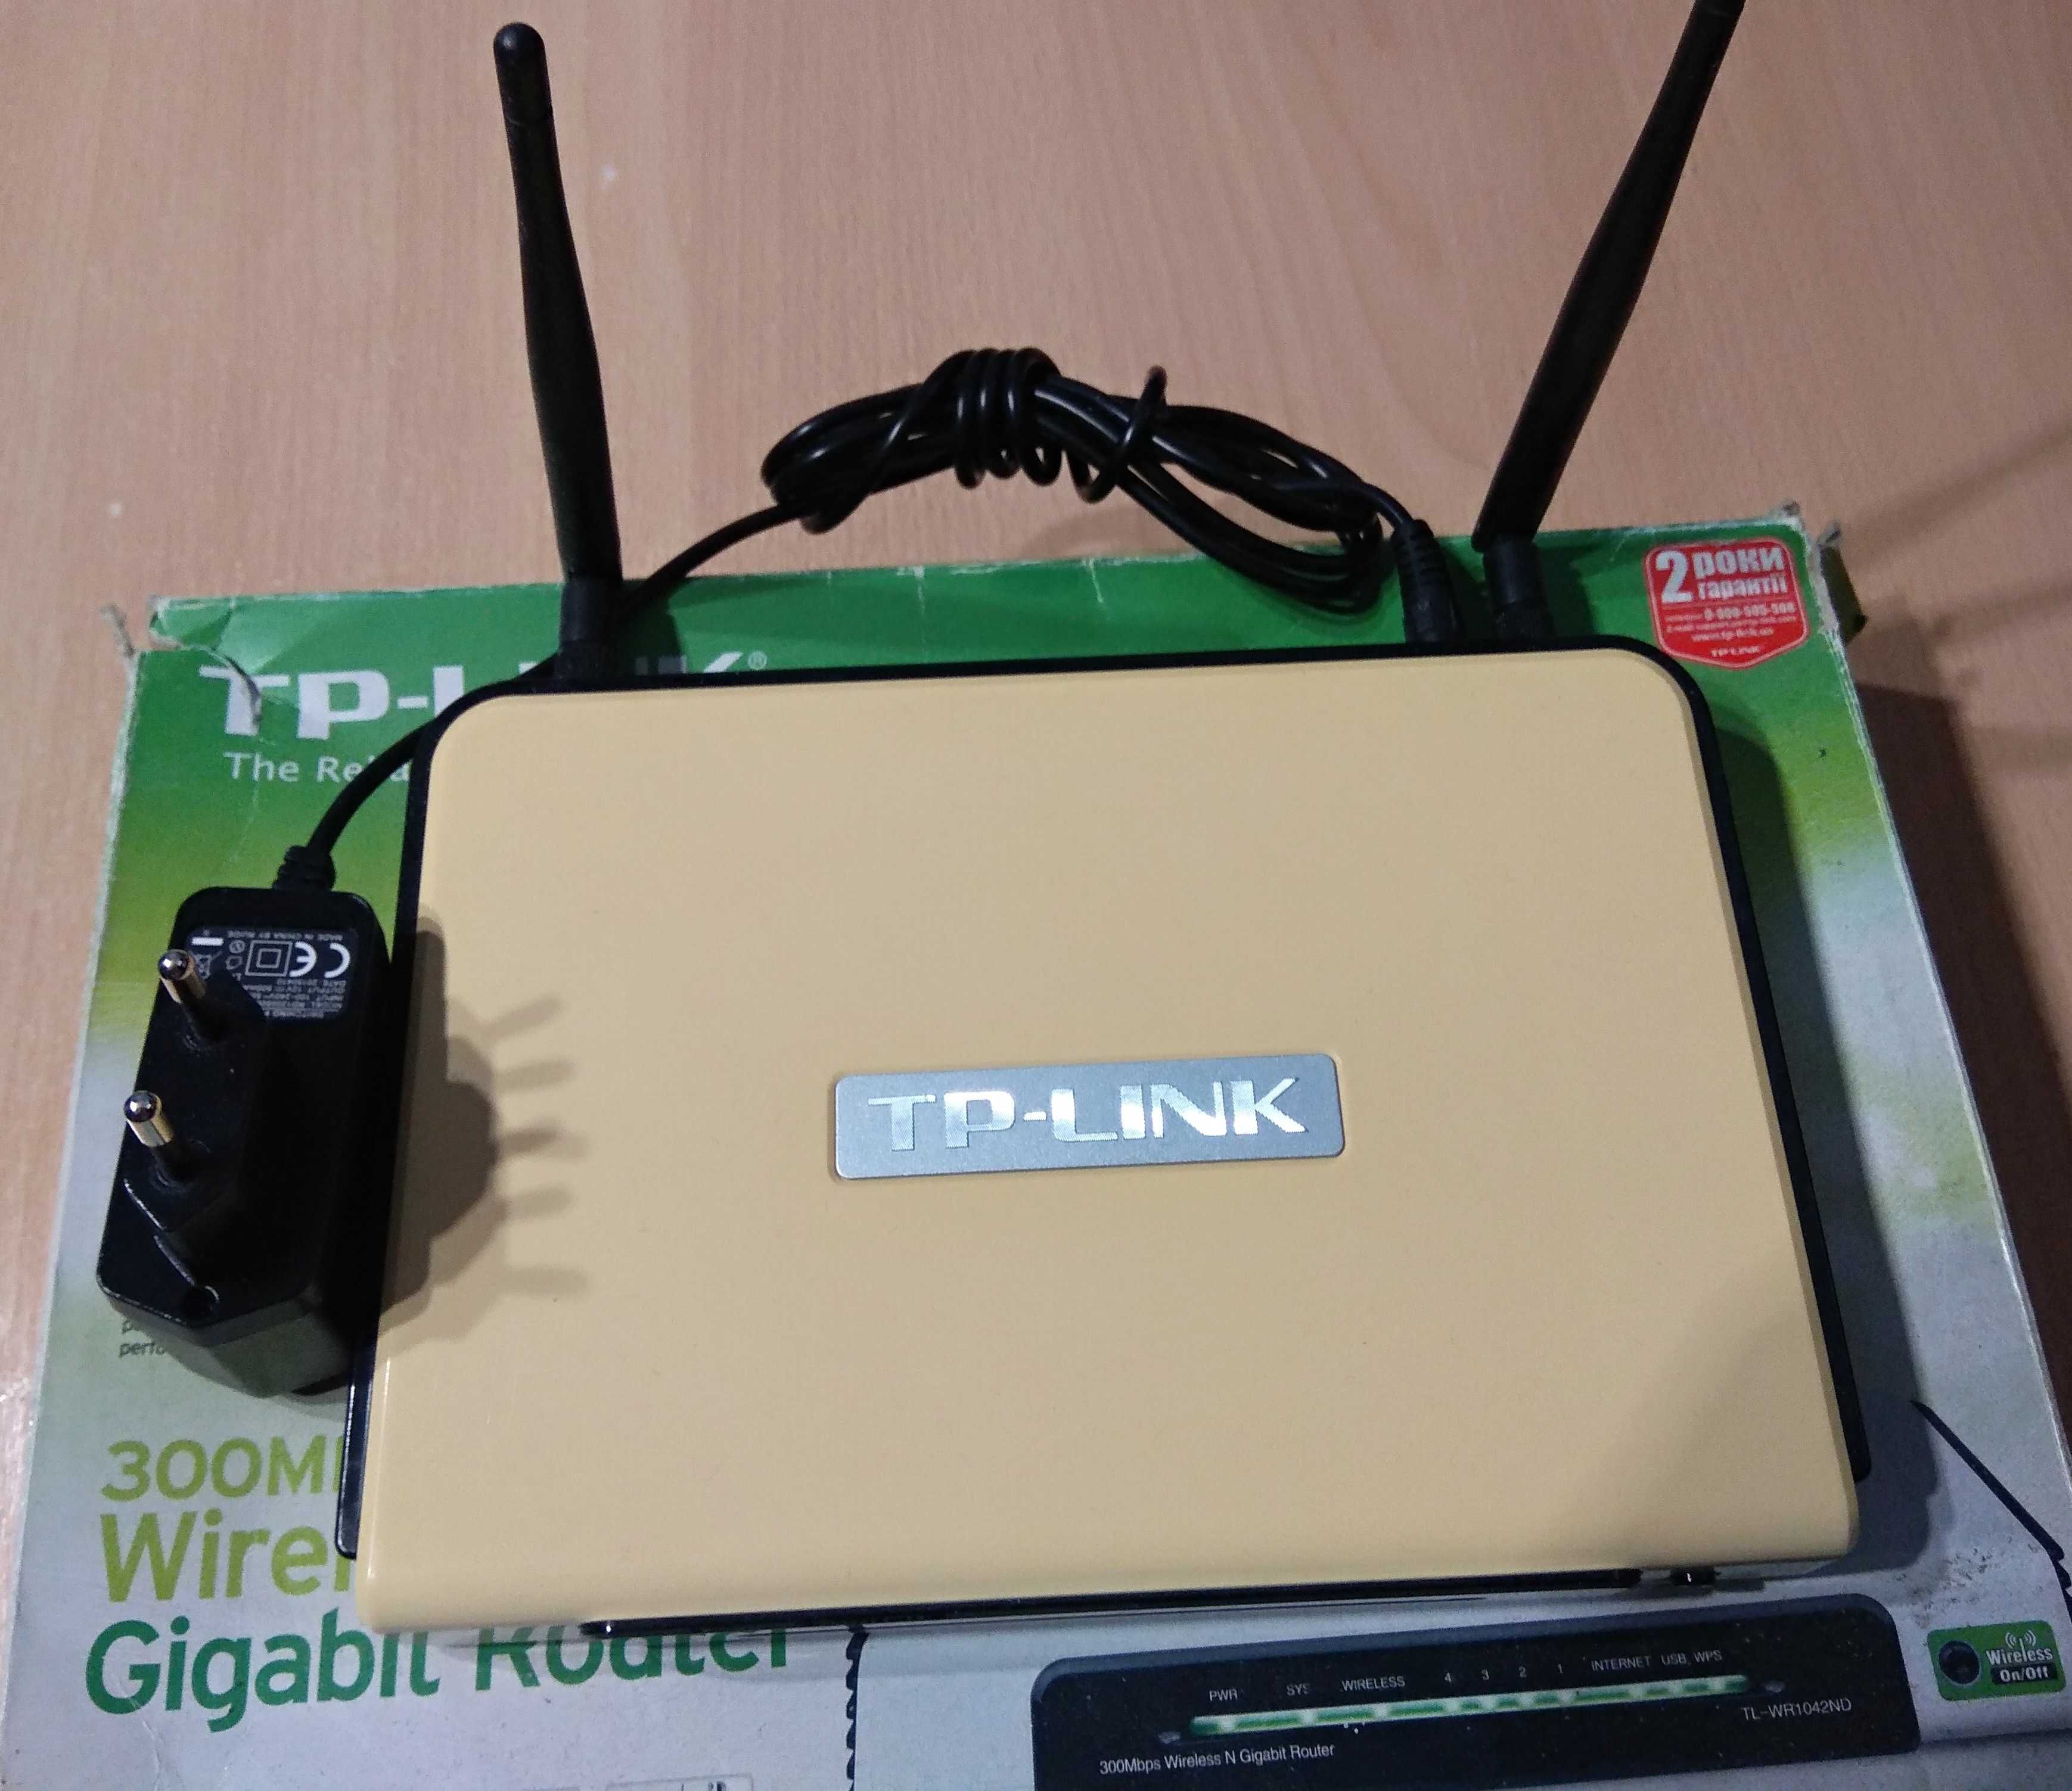 Router TP-Link TL-WR1042ND, гигабитный роутер, USB, 300 Мбит/с